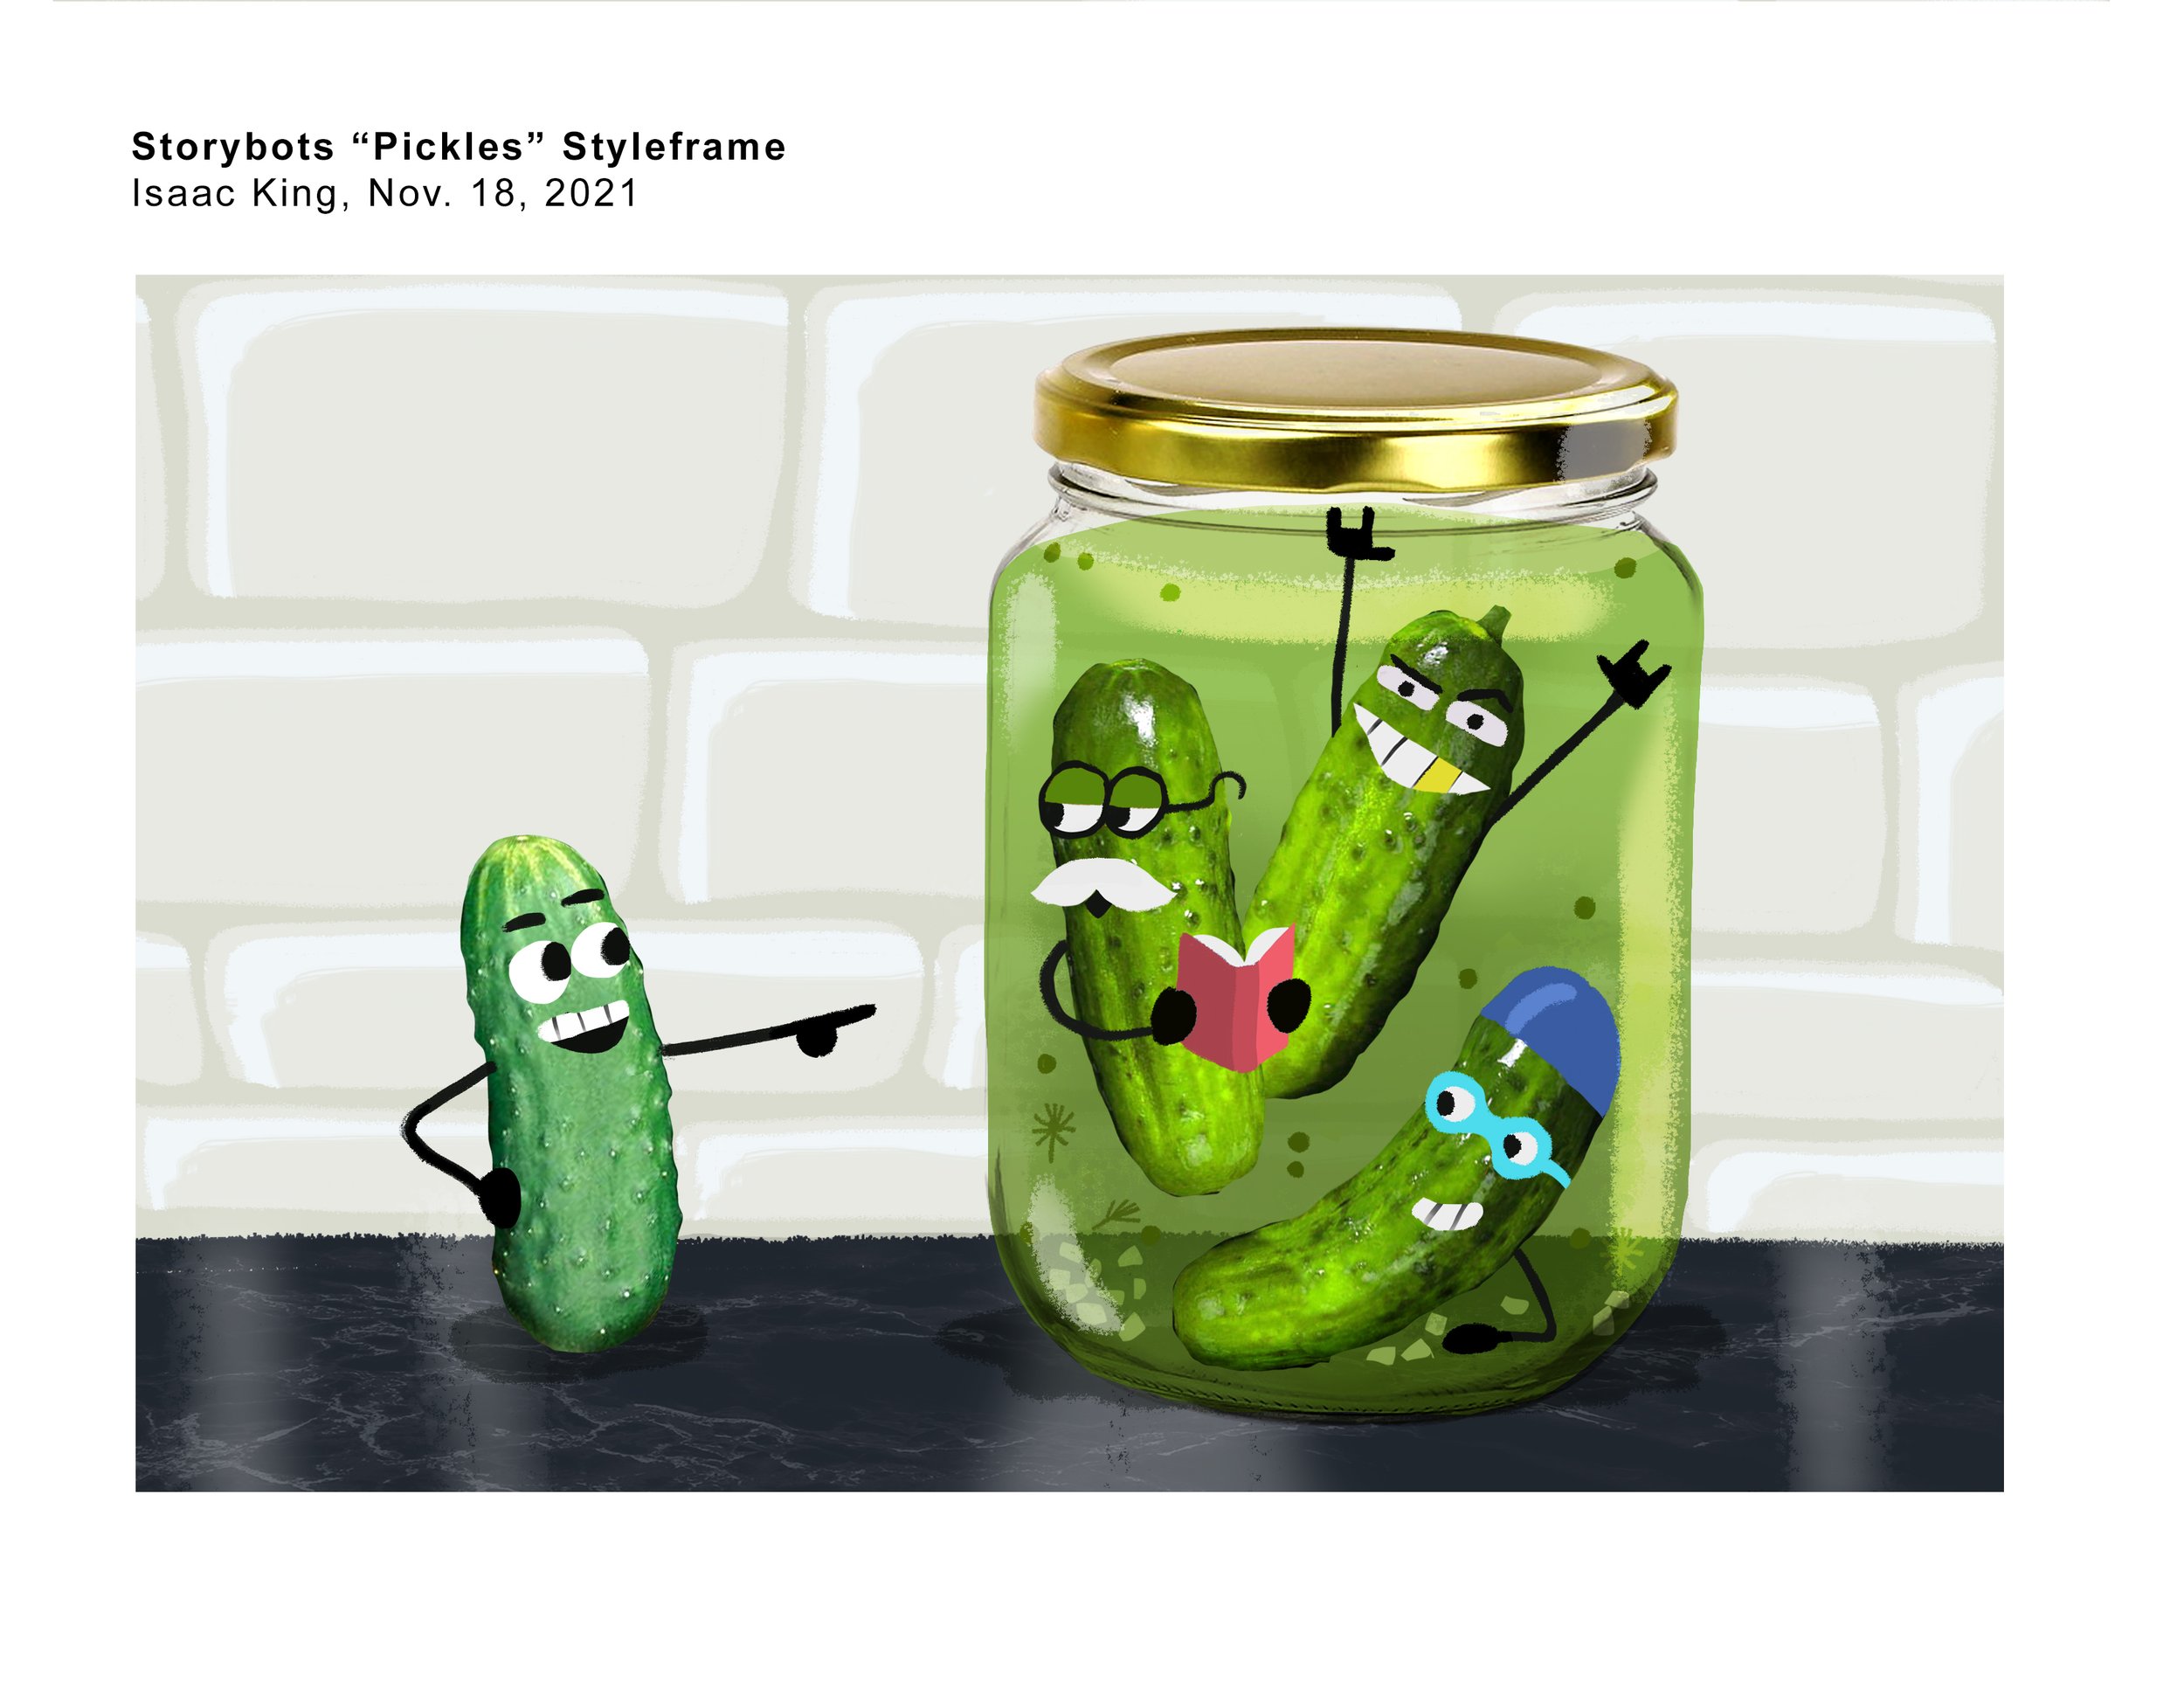 Pickles_Styleframe3.jpg